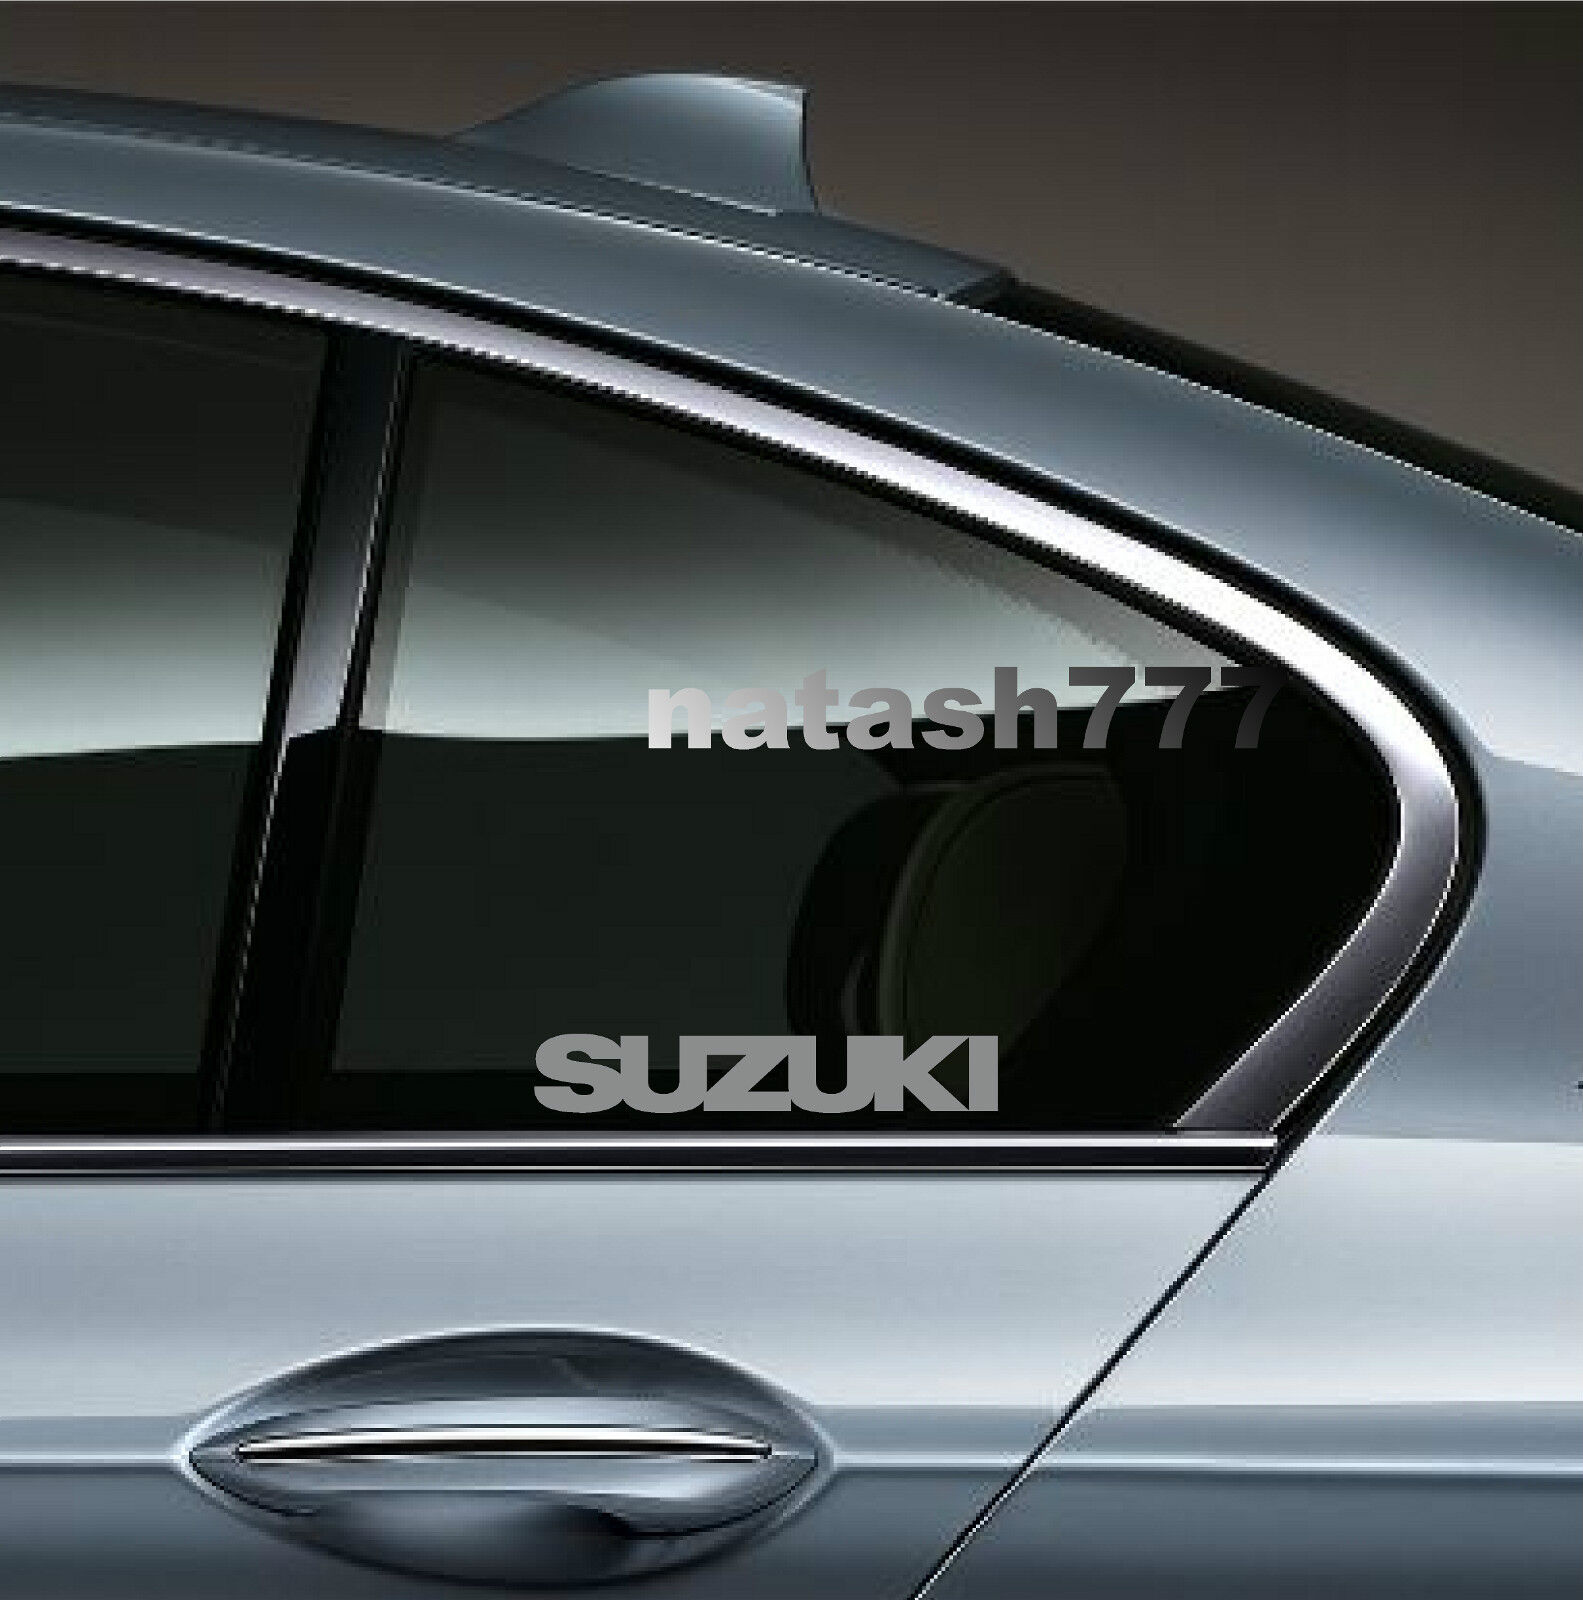 2 - SUZUKI Sport Racing Vinyl Decal sticker emblem logo SILVER